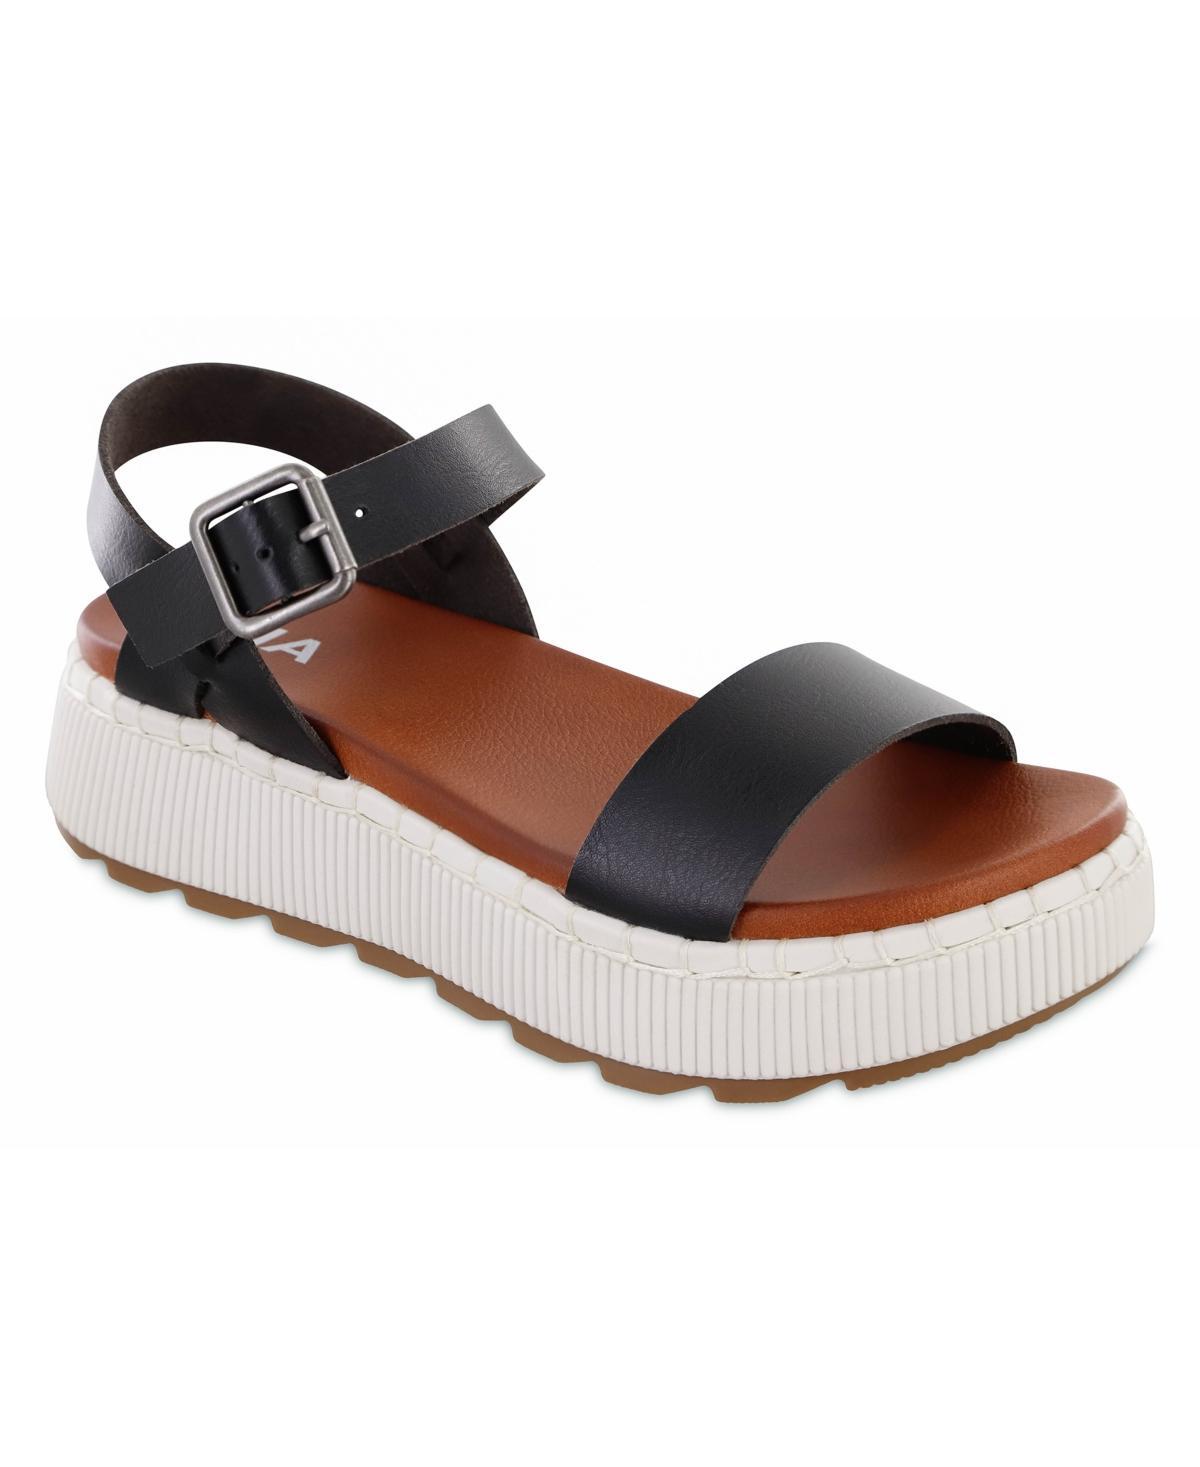 MIA Hayley Platform Sandal Product Image